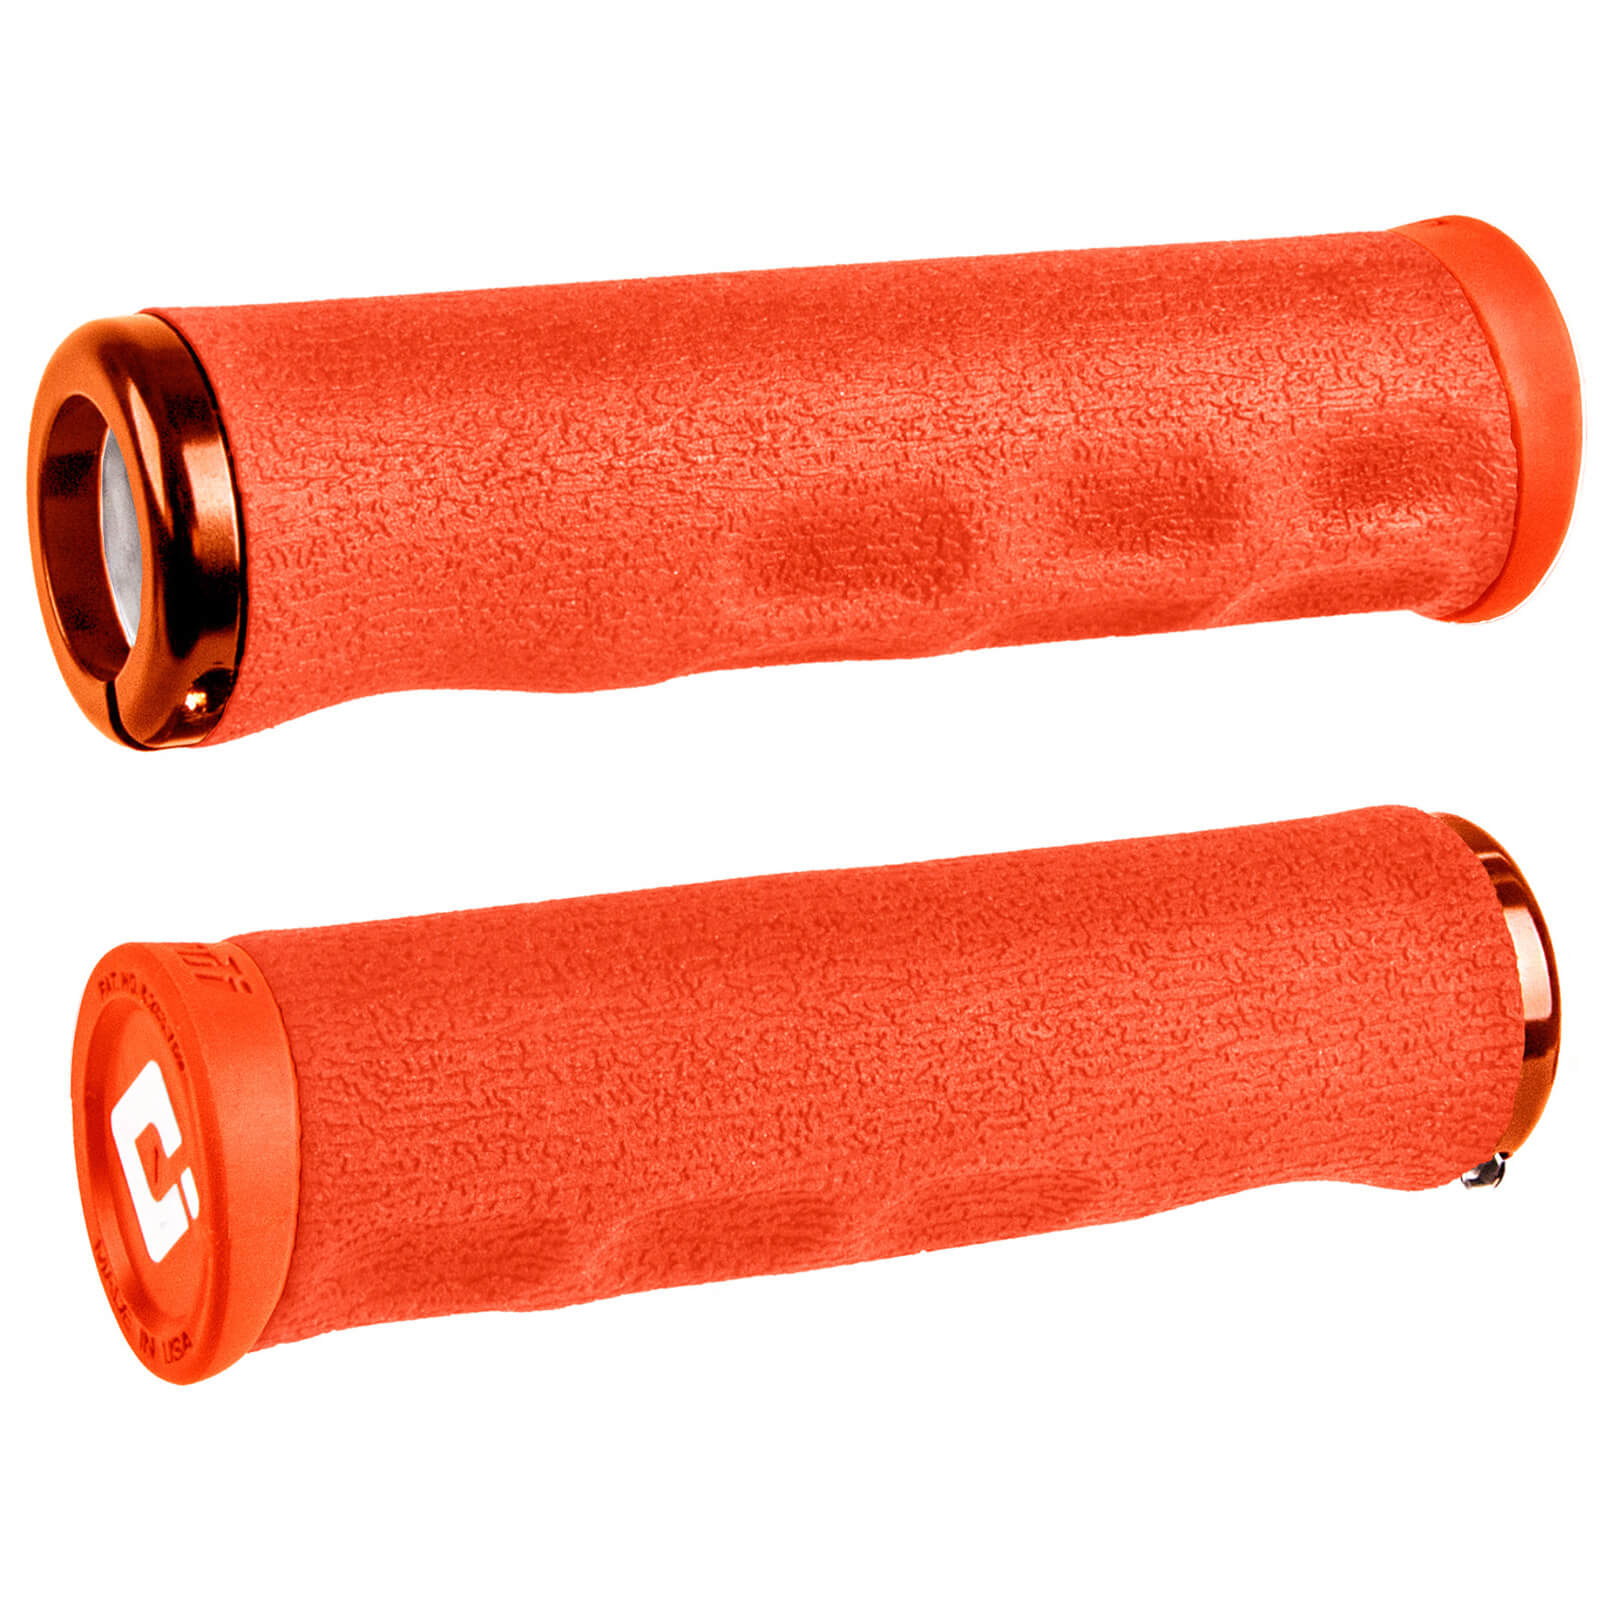 ODI Dread Lock MTB Grips - 130mm - Orange